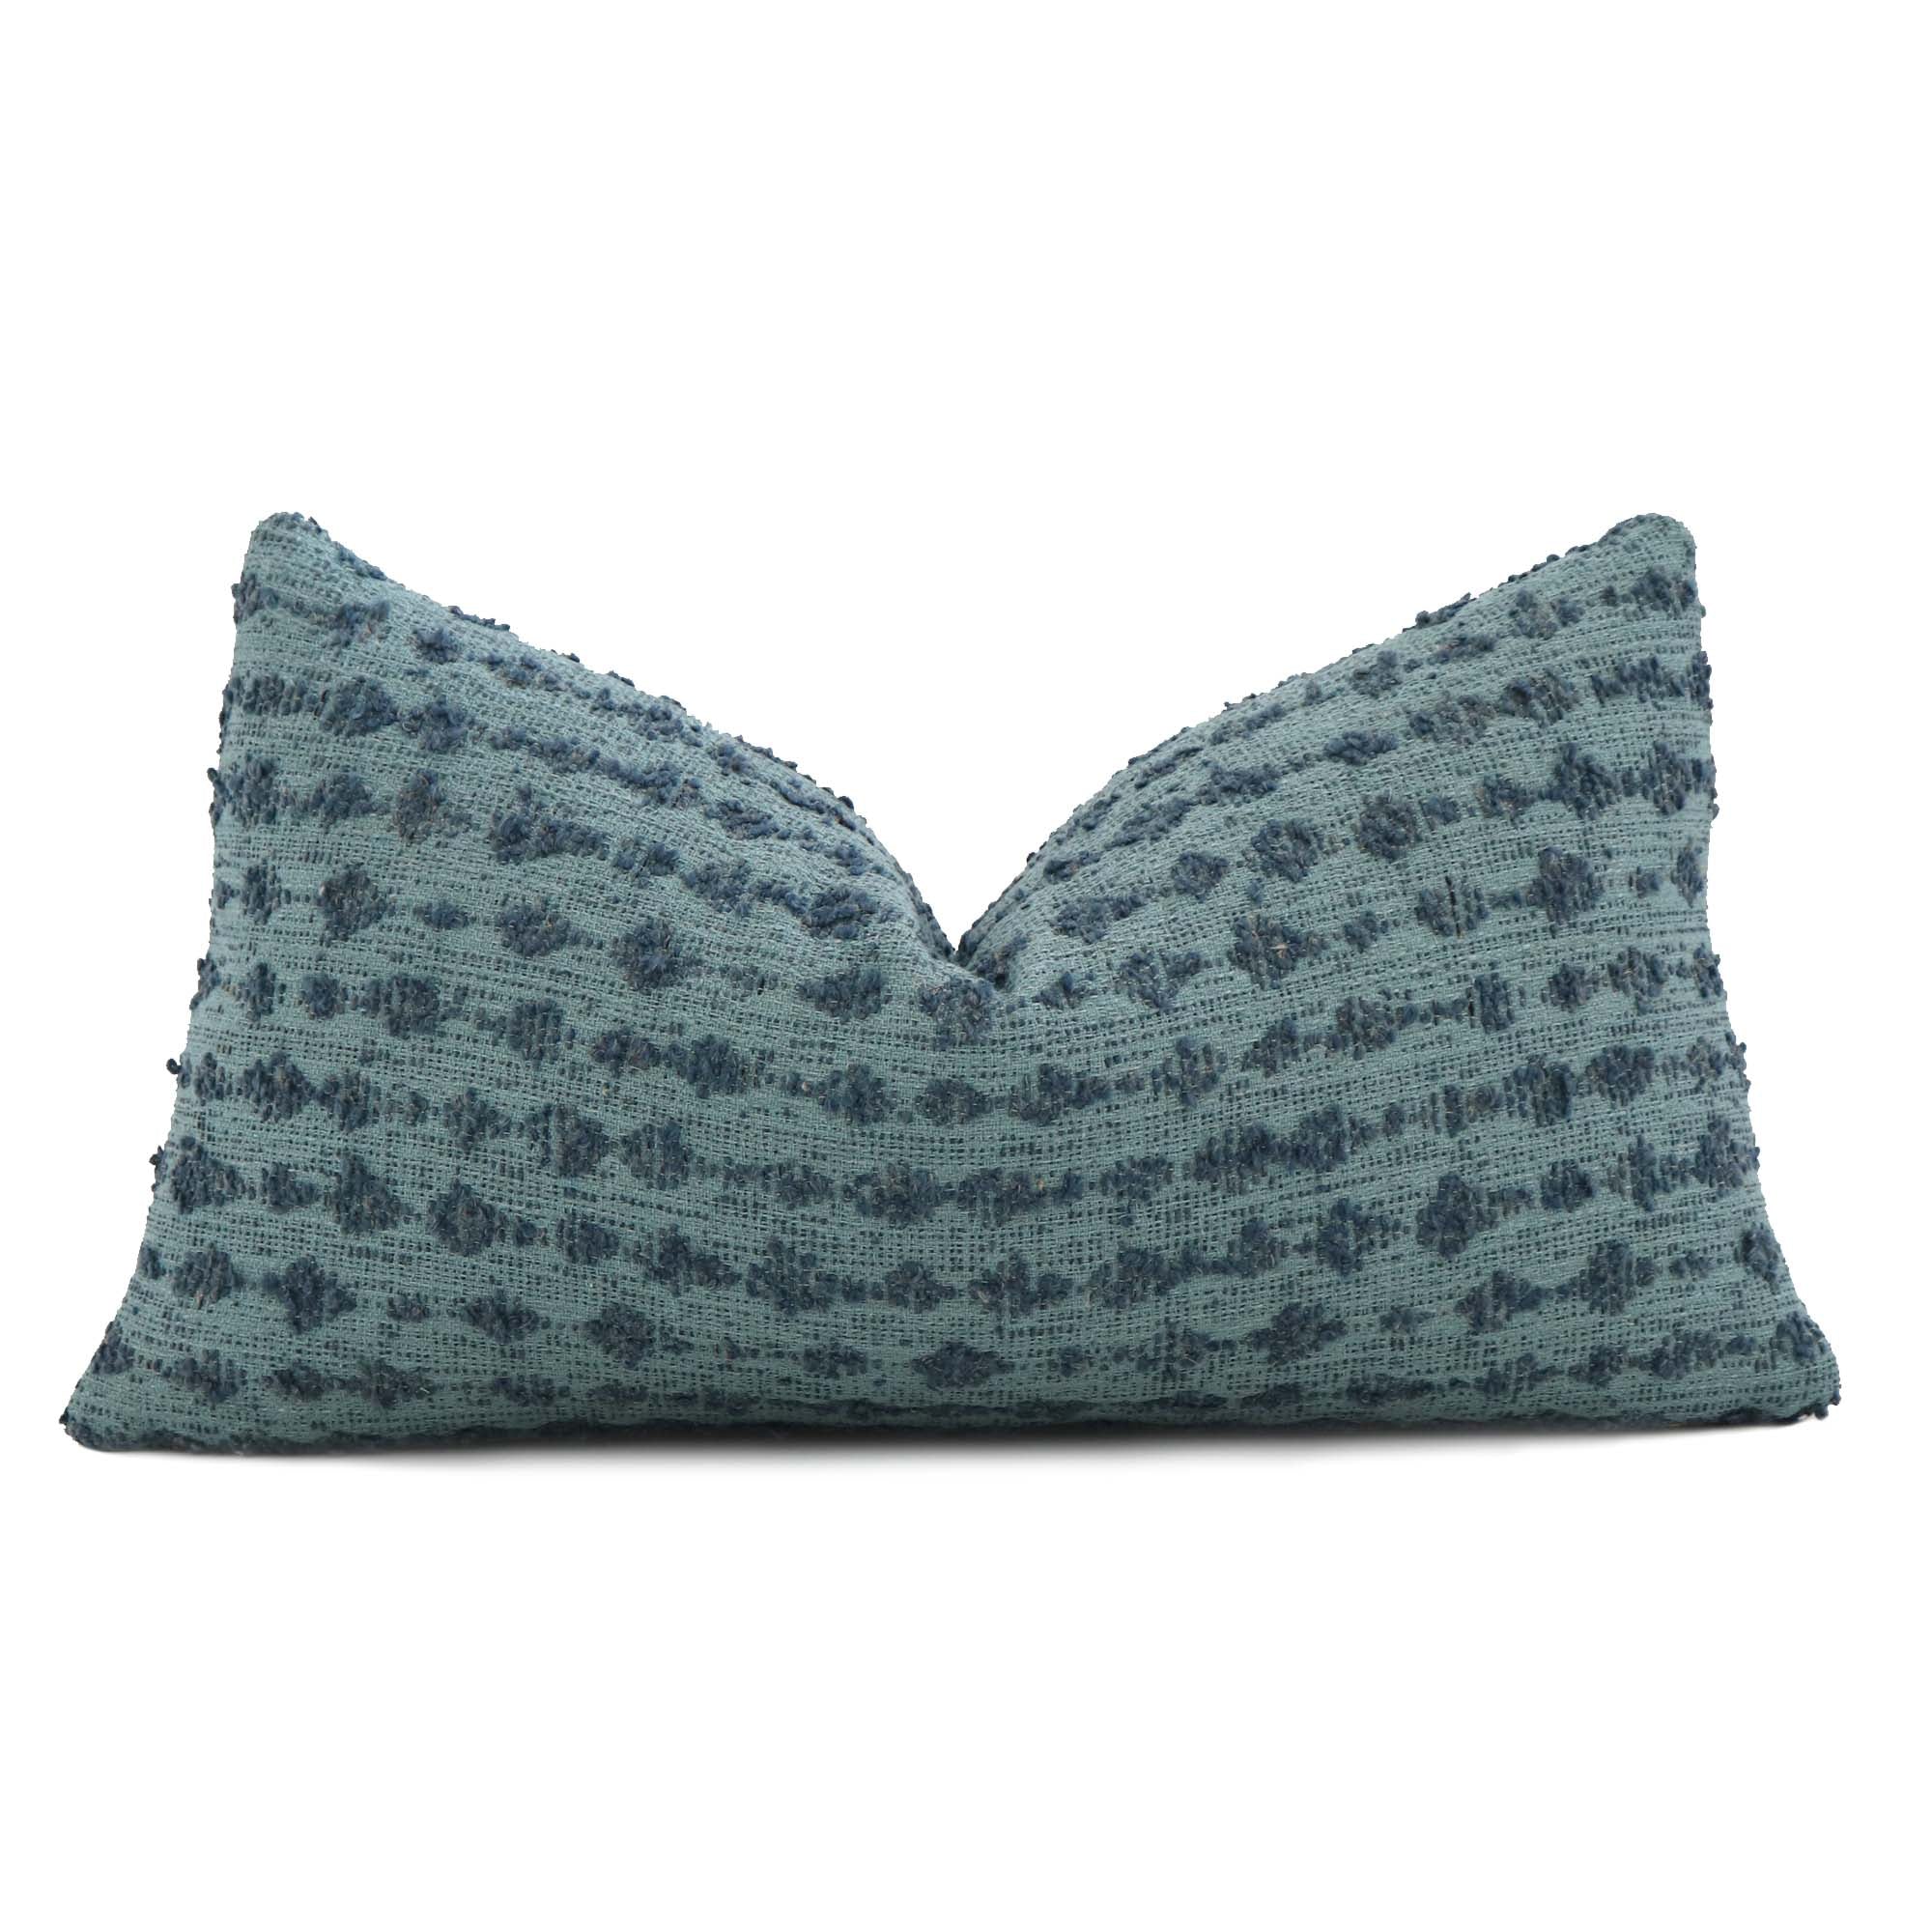 Kelly Wearstler LeeJofa Serai Sky Blue Stripe Boucle Designer Lumbar Throw Pillow Cover